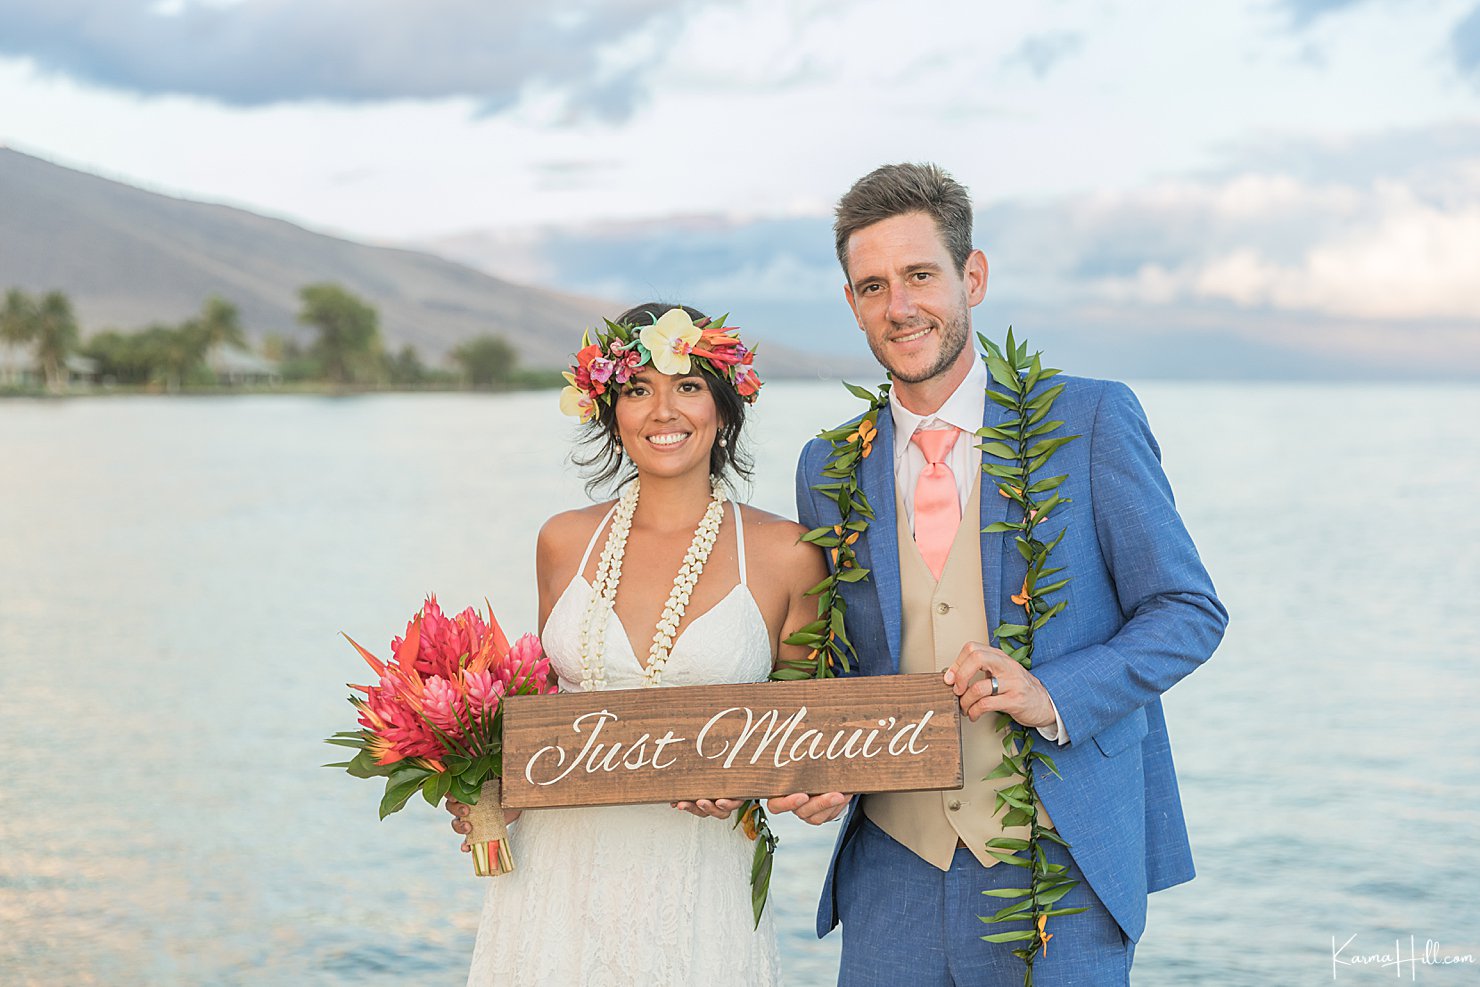 Just Maui'd - Olowalu Wedding photography